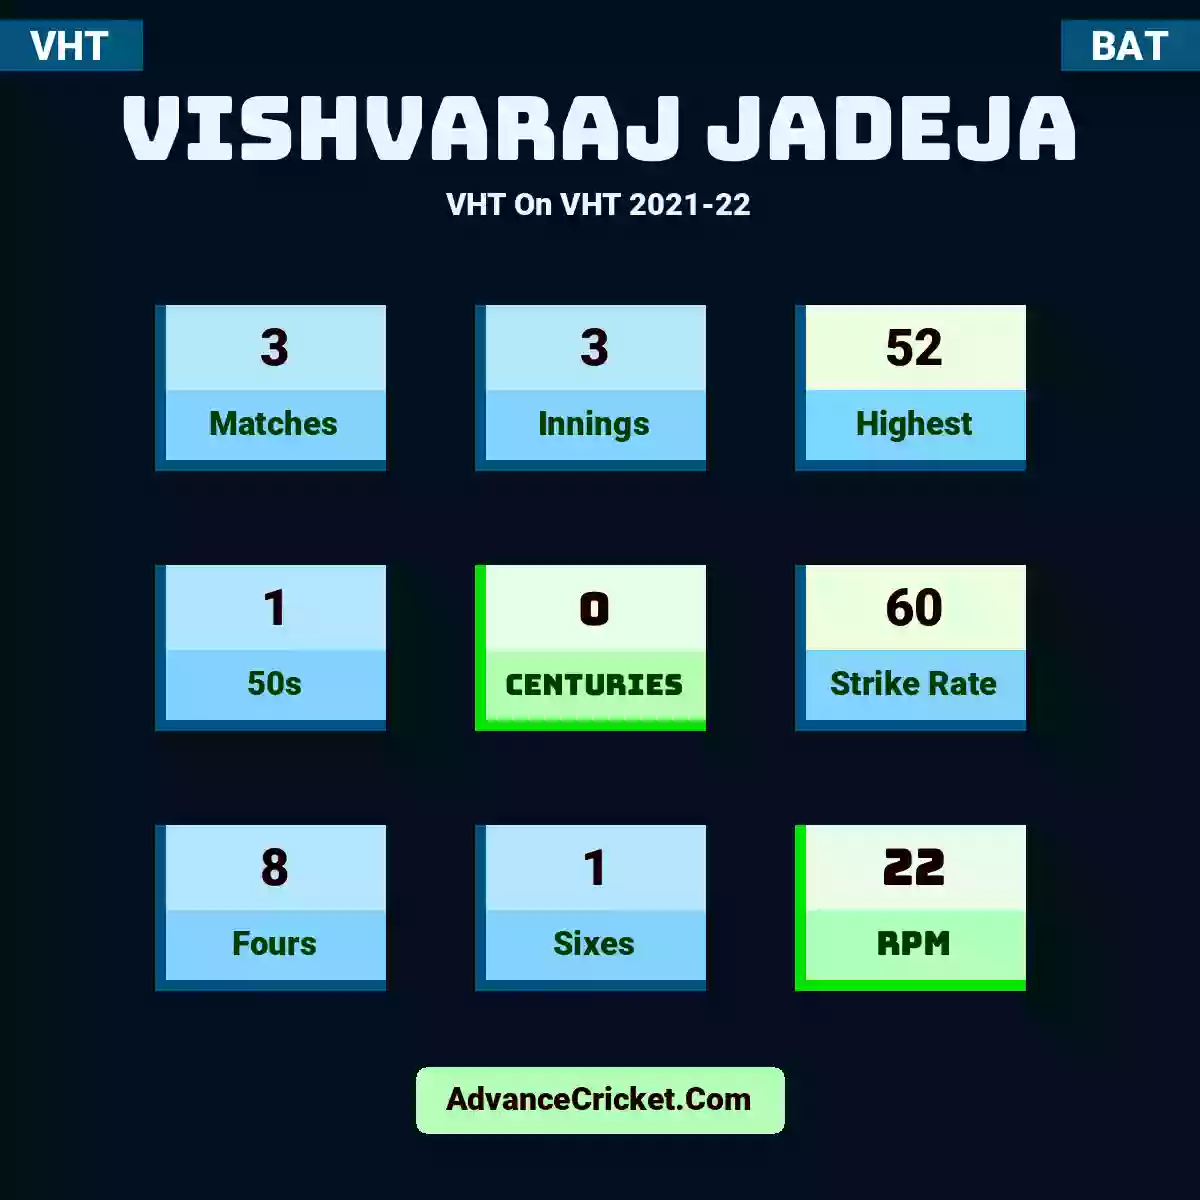 Vishvaraj Jadeja VHT  On VHT 2021-22, Vishvaraj Jadeja played 3 matches, scored 52 runs as highest, 1 half-centuries, and 0 centuries, with a strike rate of 60. V.Jadeja hit 8 fours and 1 sixes, with an RPM of 22.